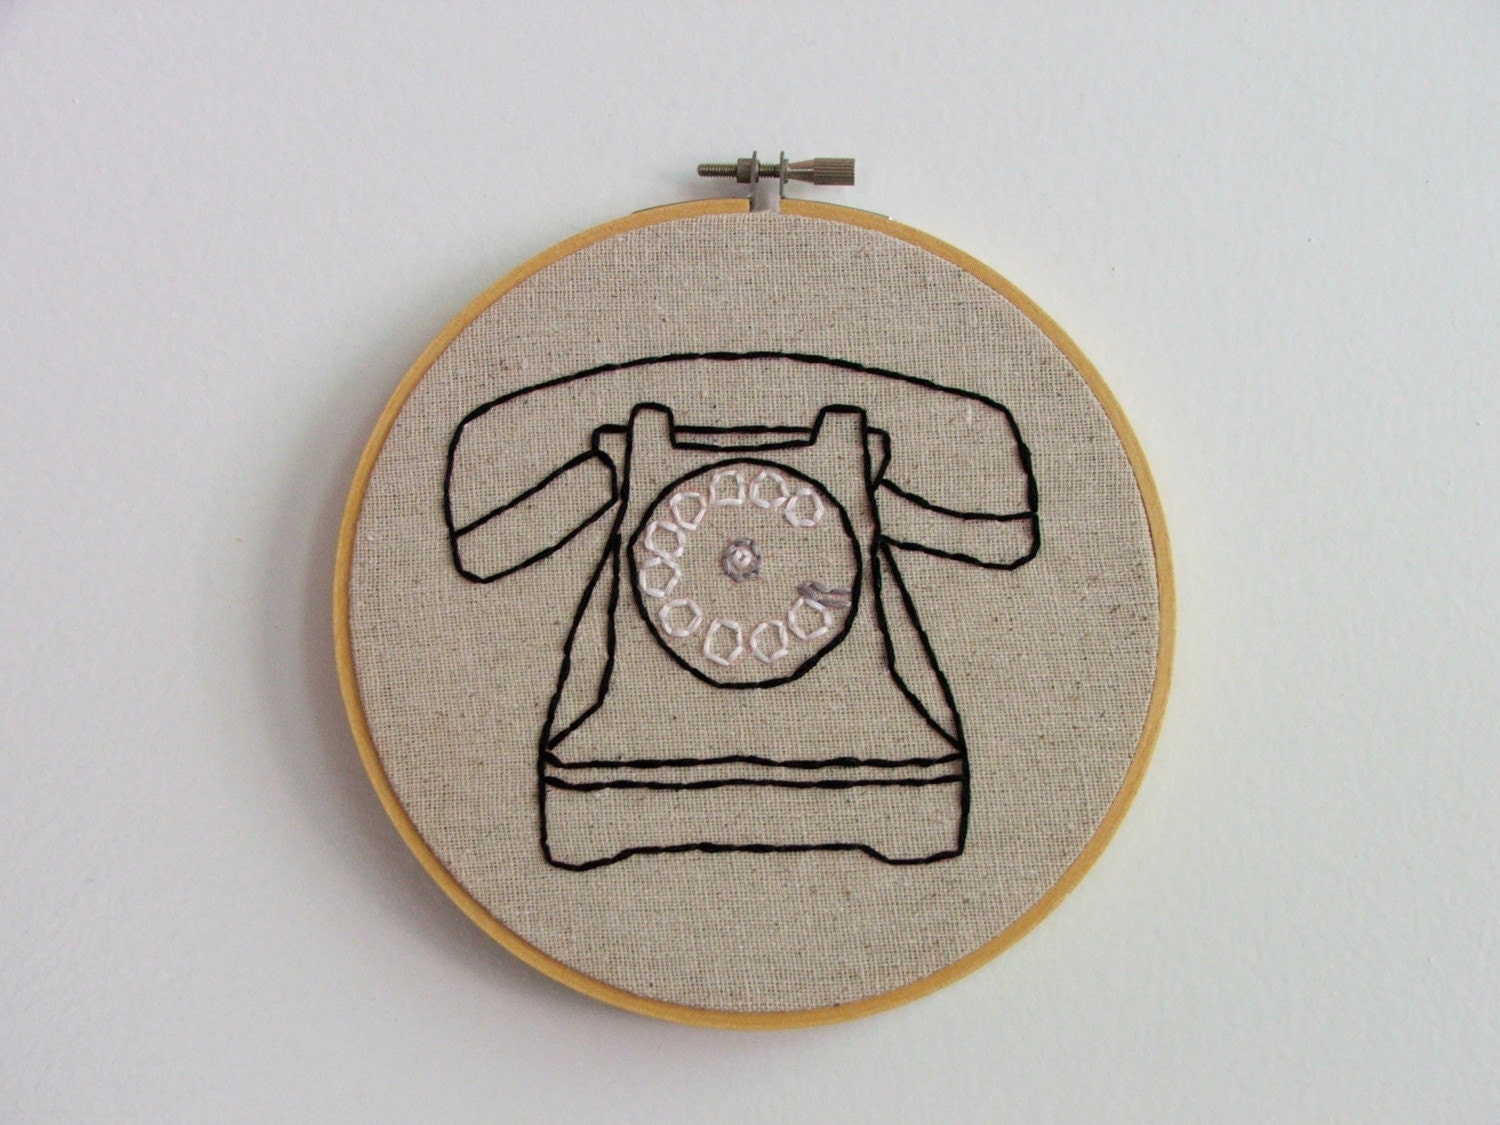 Telephone Talker